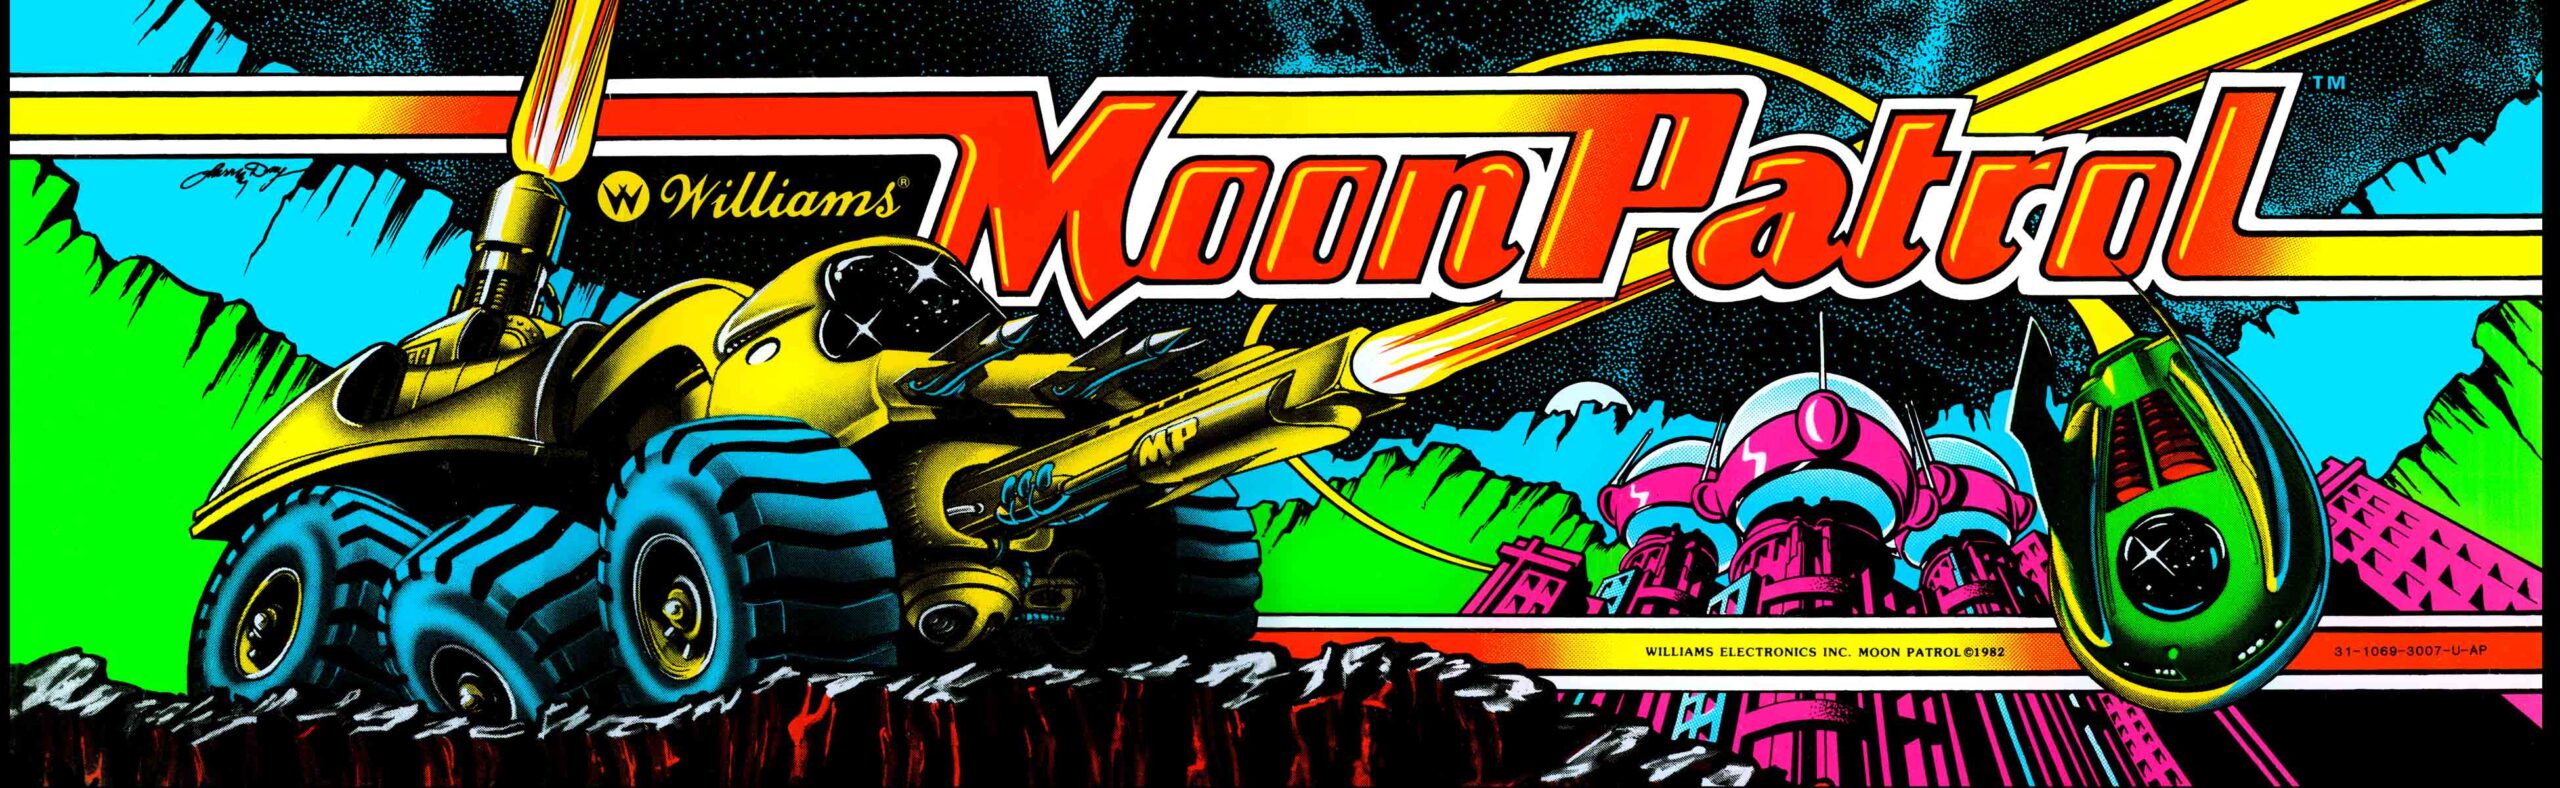  Moon Patrol Arcade Marquee 26″ x 8″